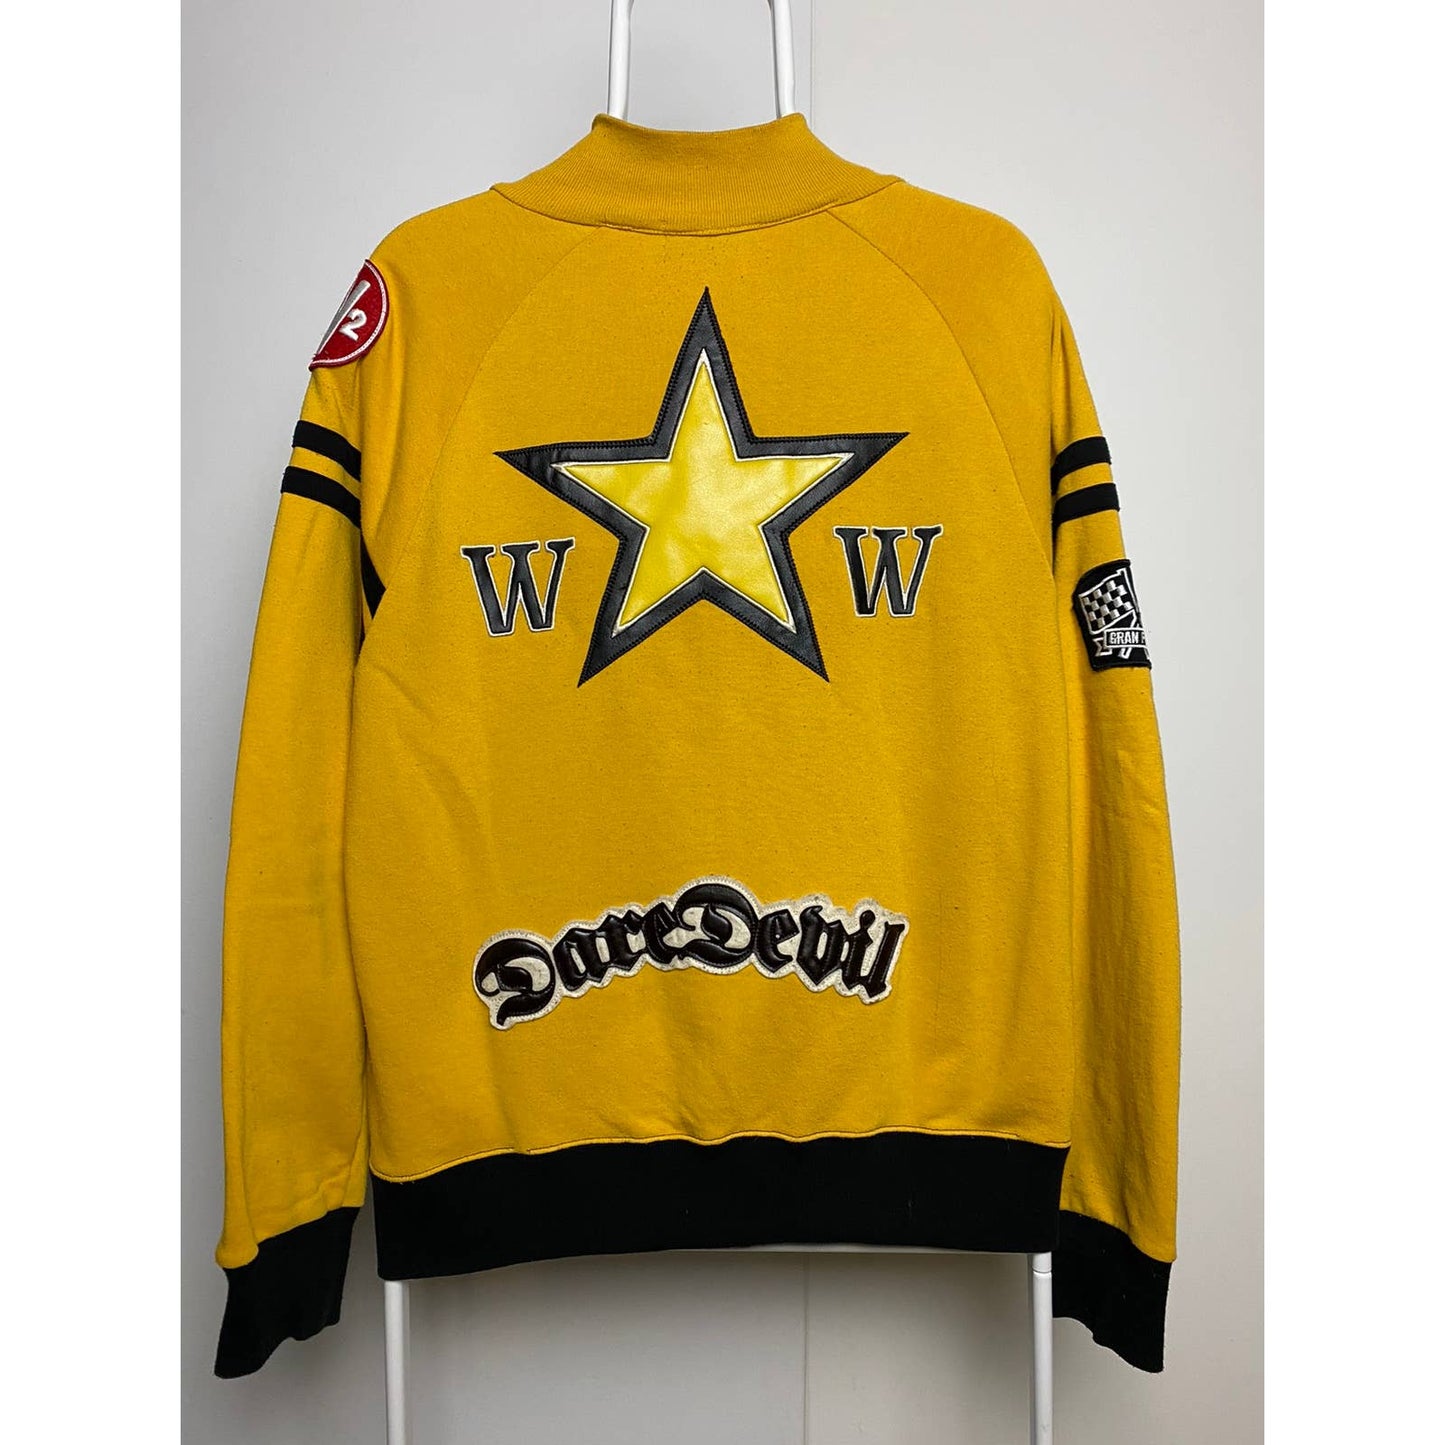 Rockers vintage Racing yellow zip sweatshirt blue one